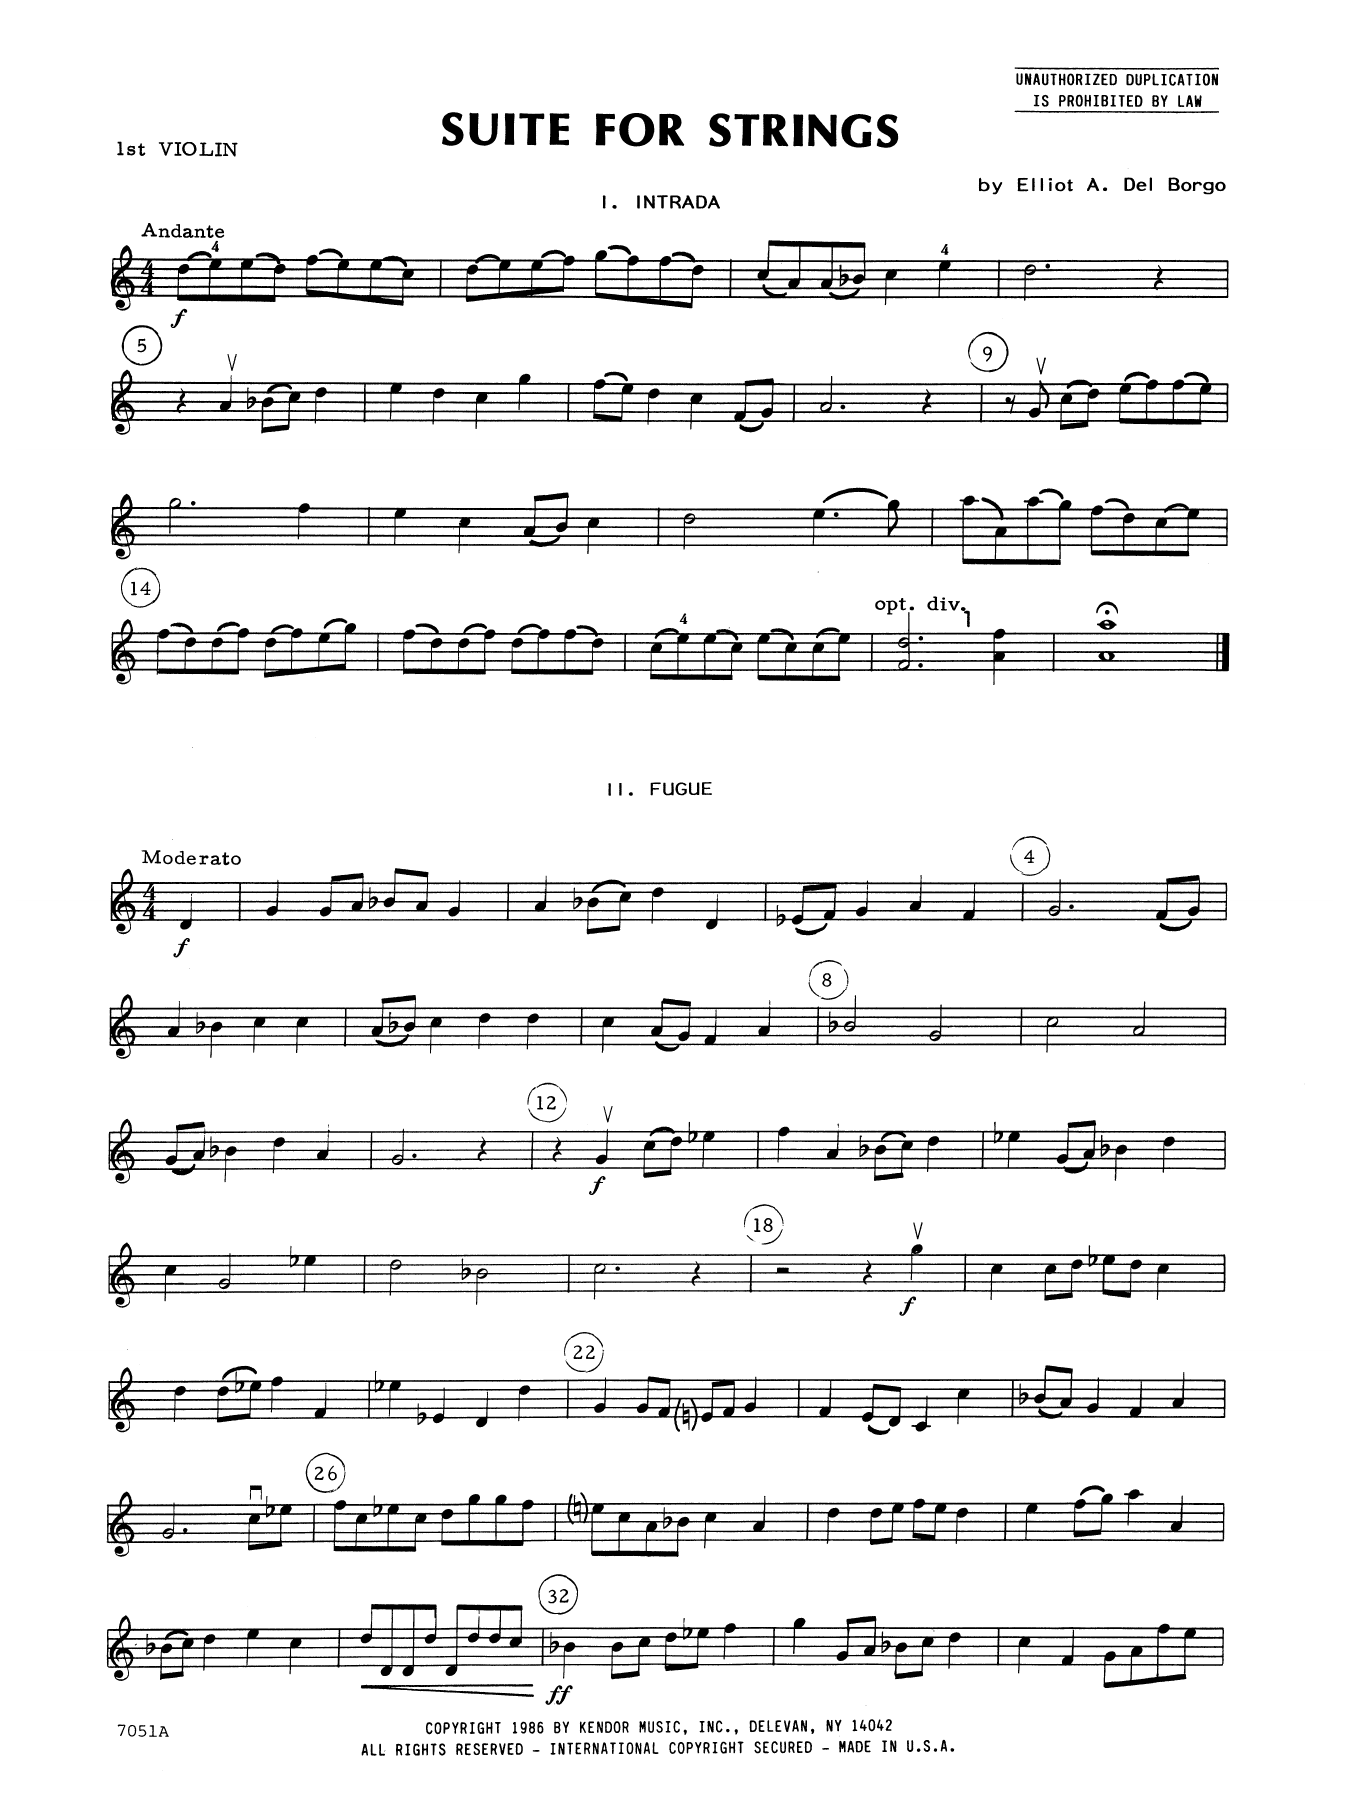 Download Elliot A. Del Borgo Suite for Strings - 1st Violin Sheet Music